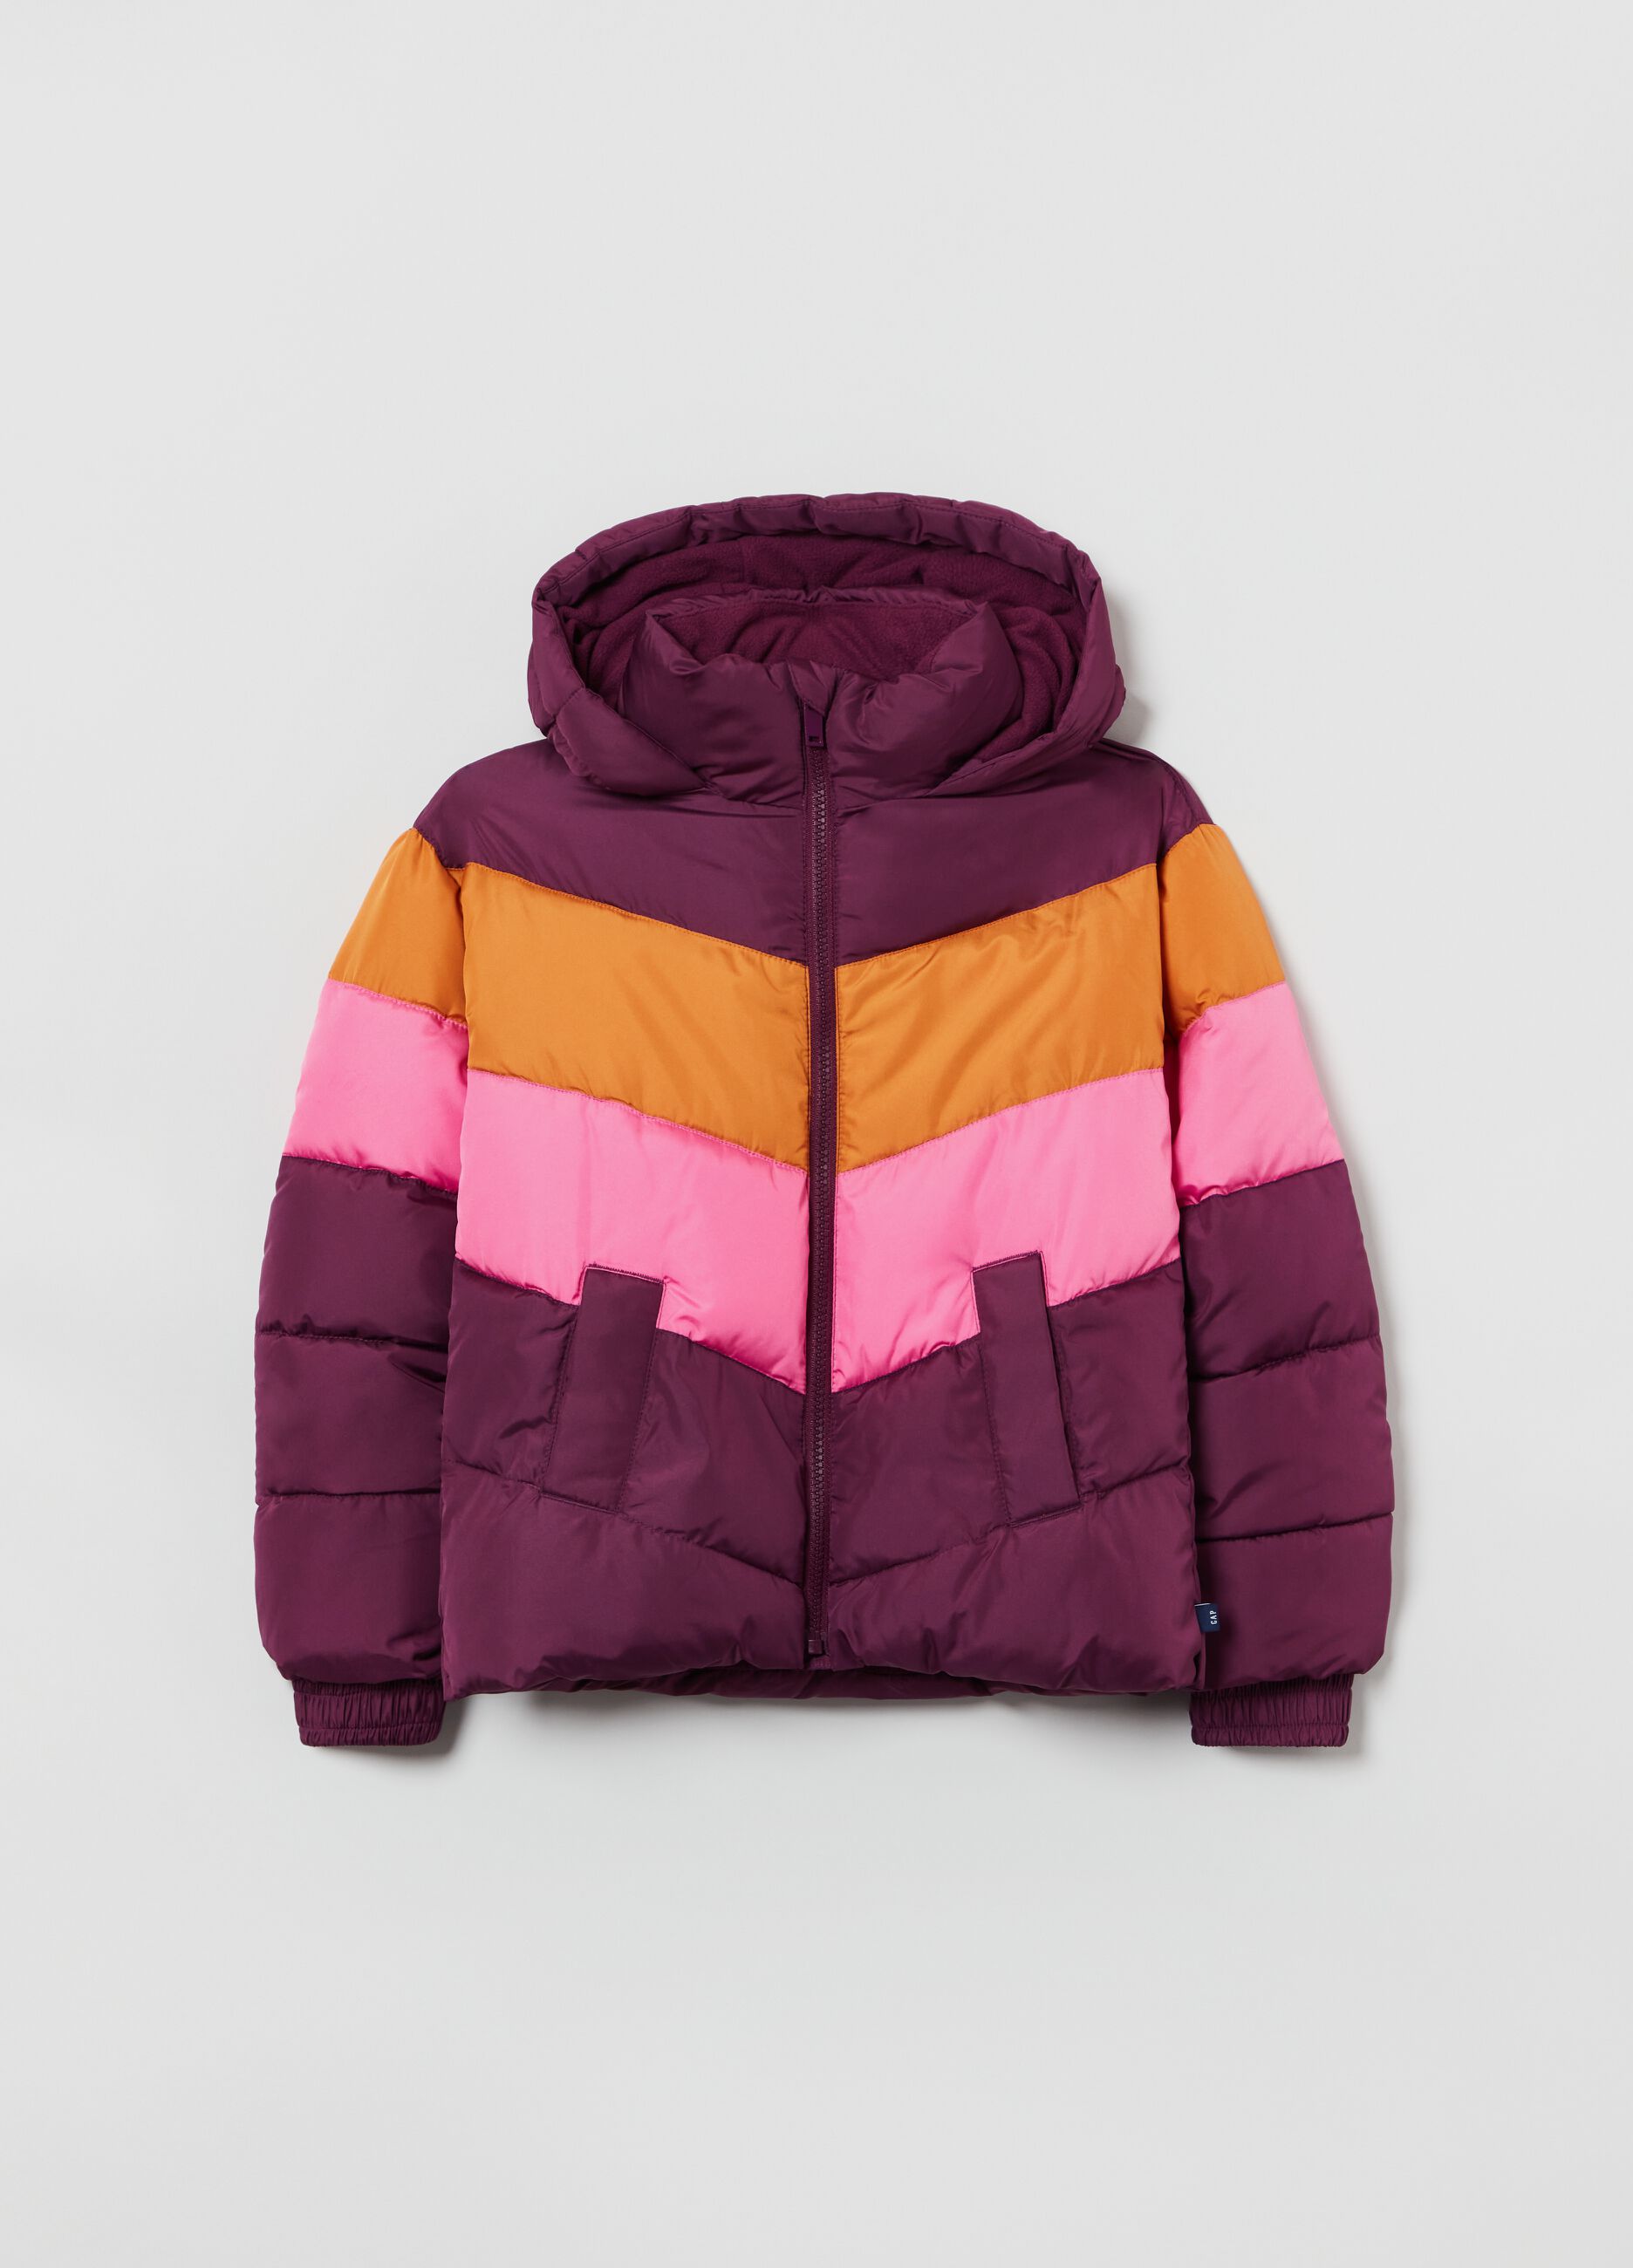 Full-zip color block puffer jacket with hood